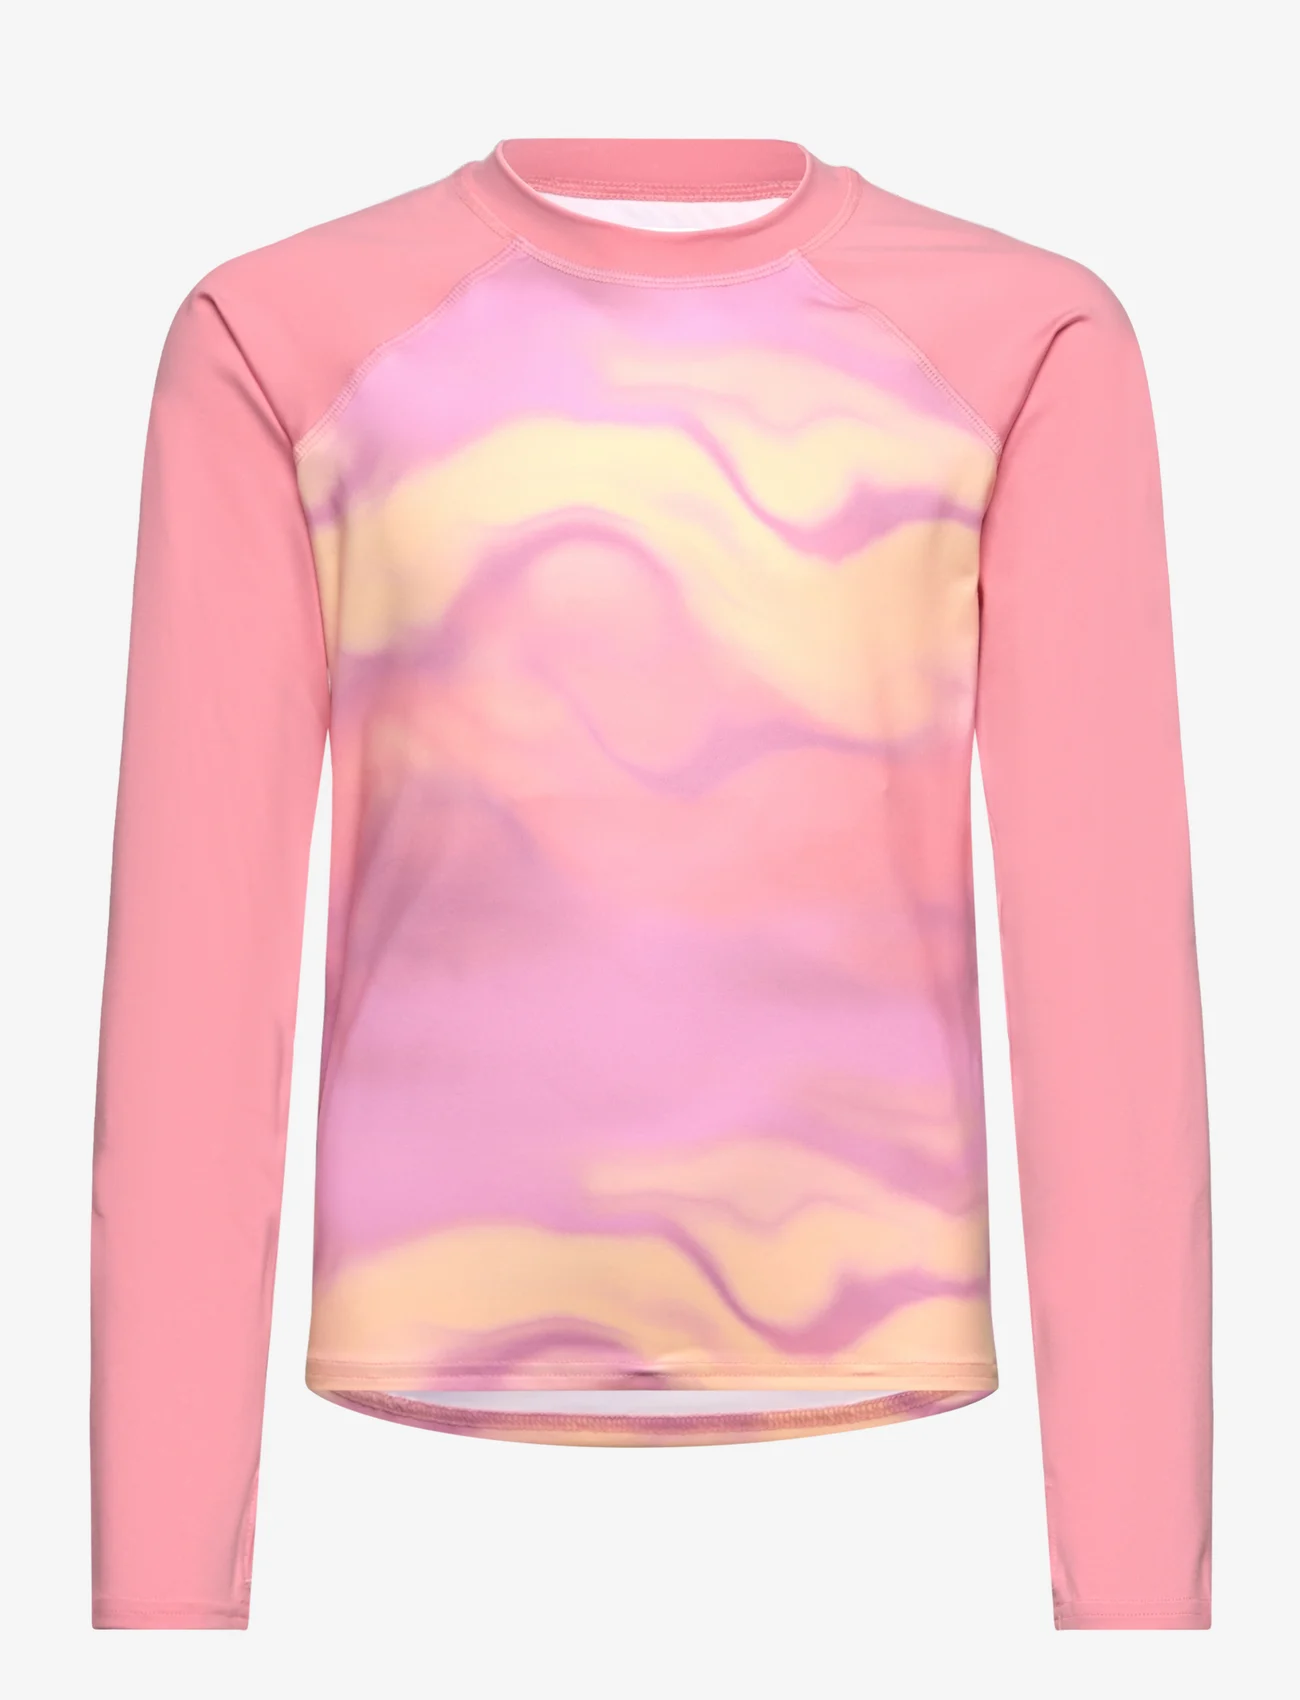 Columbia Sportswear - Sandy Shores Printed LS Sunguard - gode sommertilbud - salmon rose undercurrent, cosmos - 0